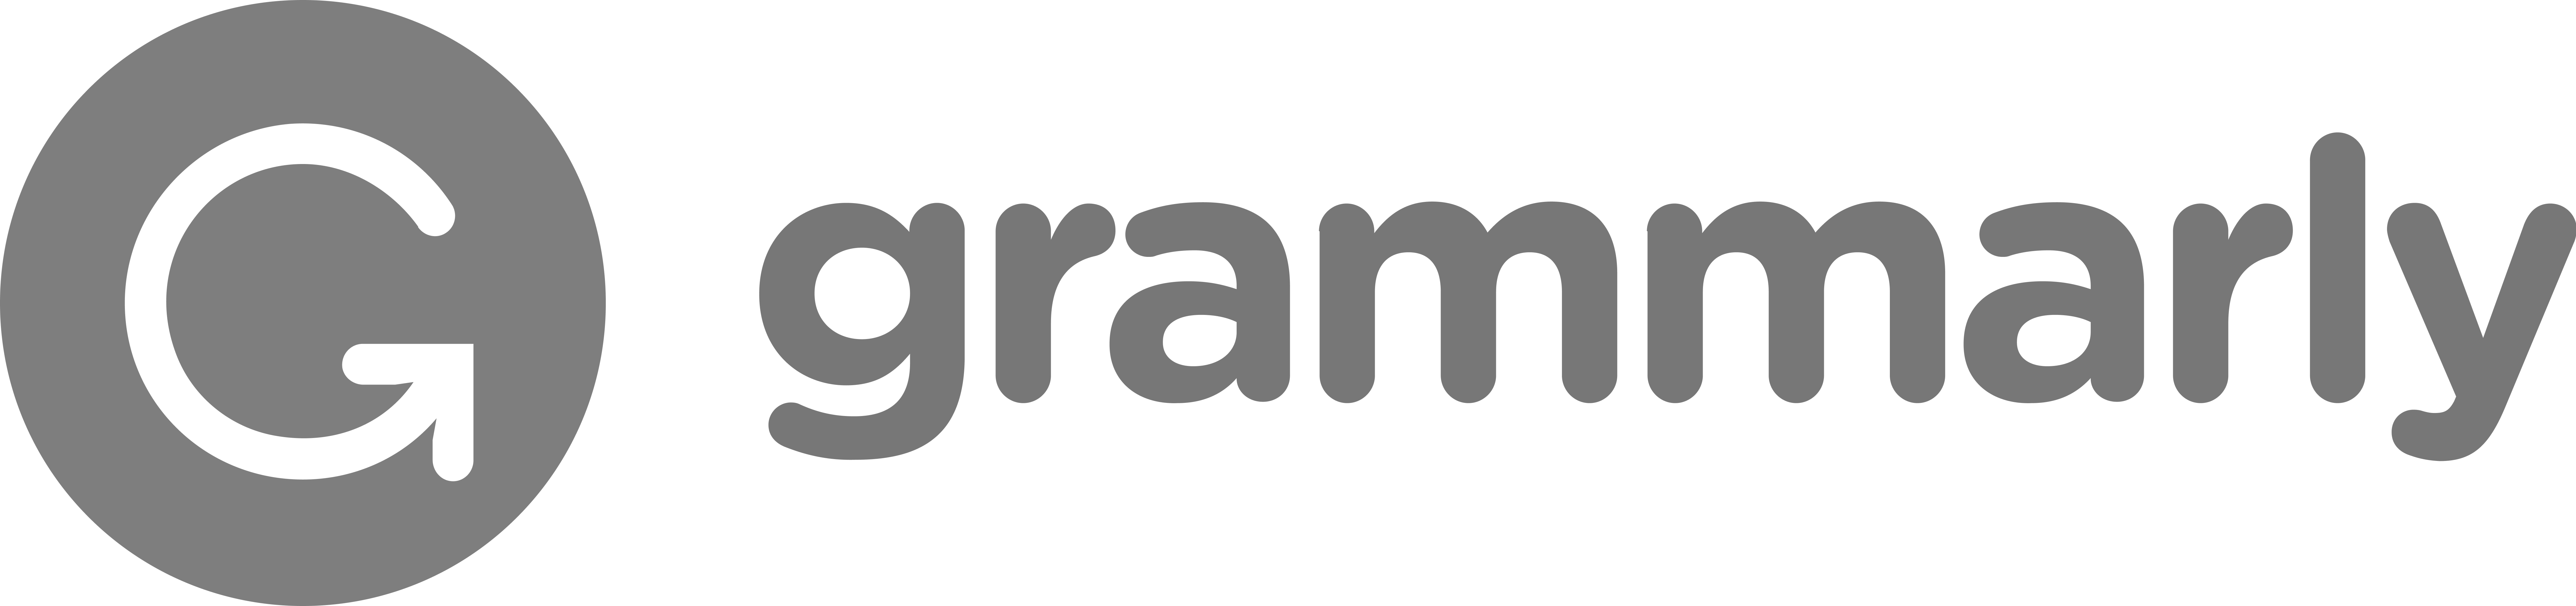 grammarly logo gray color